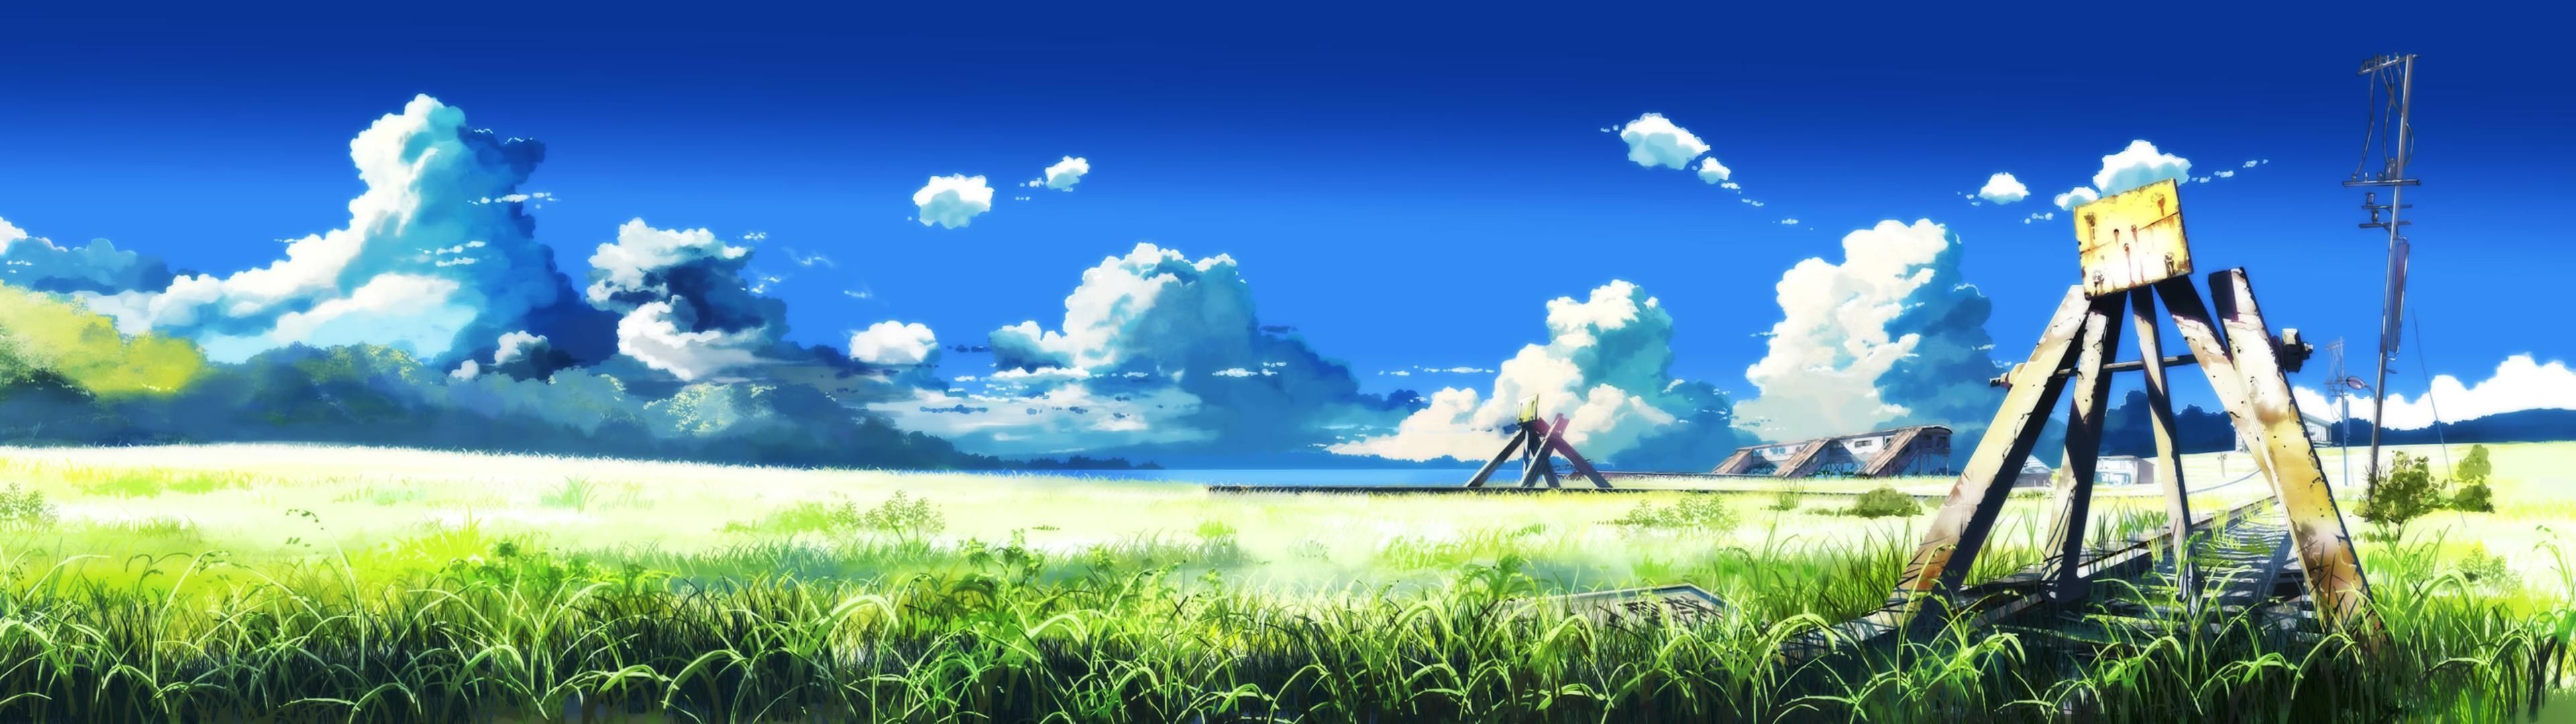 Anime Landscape Dual Monitor Wallpaperwalpaperlist.com